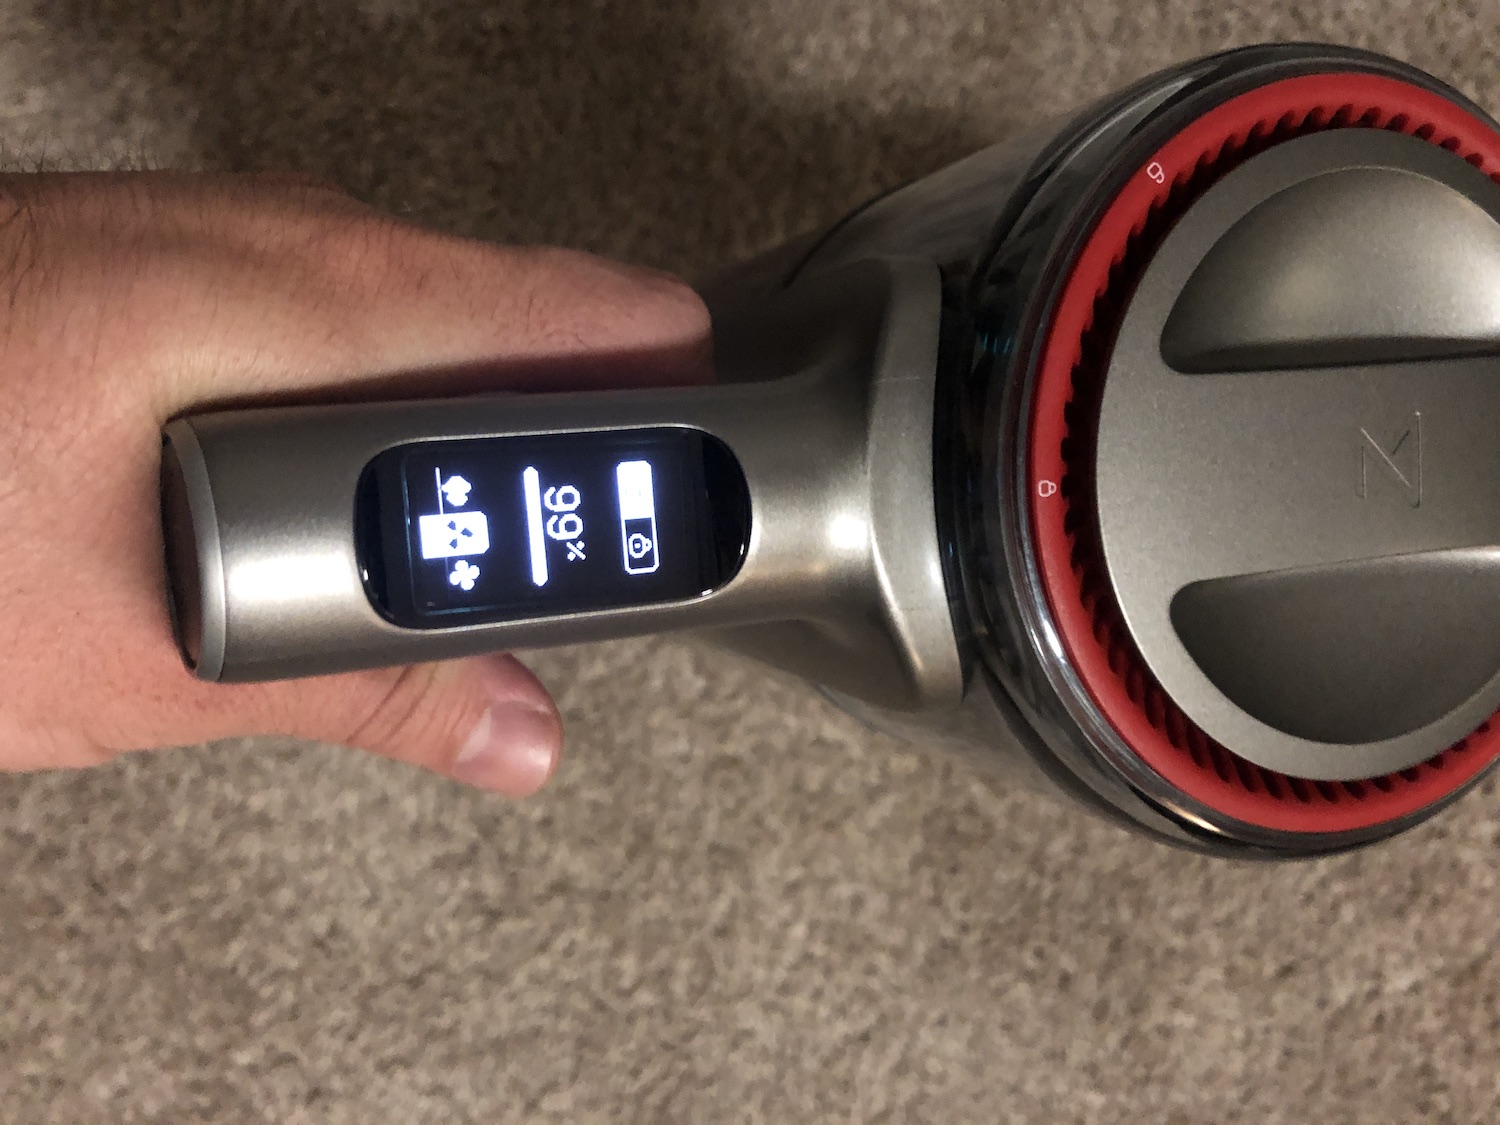 Roborock H7 Cordless Vacuum Review: It Packs a Punch